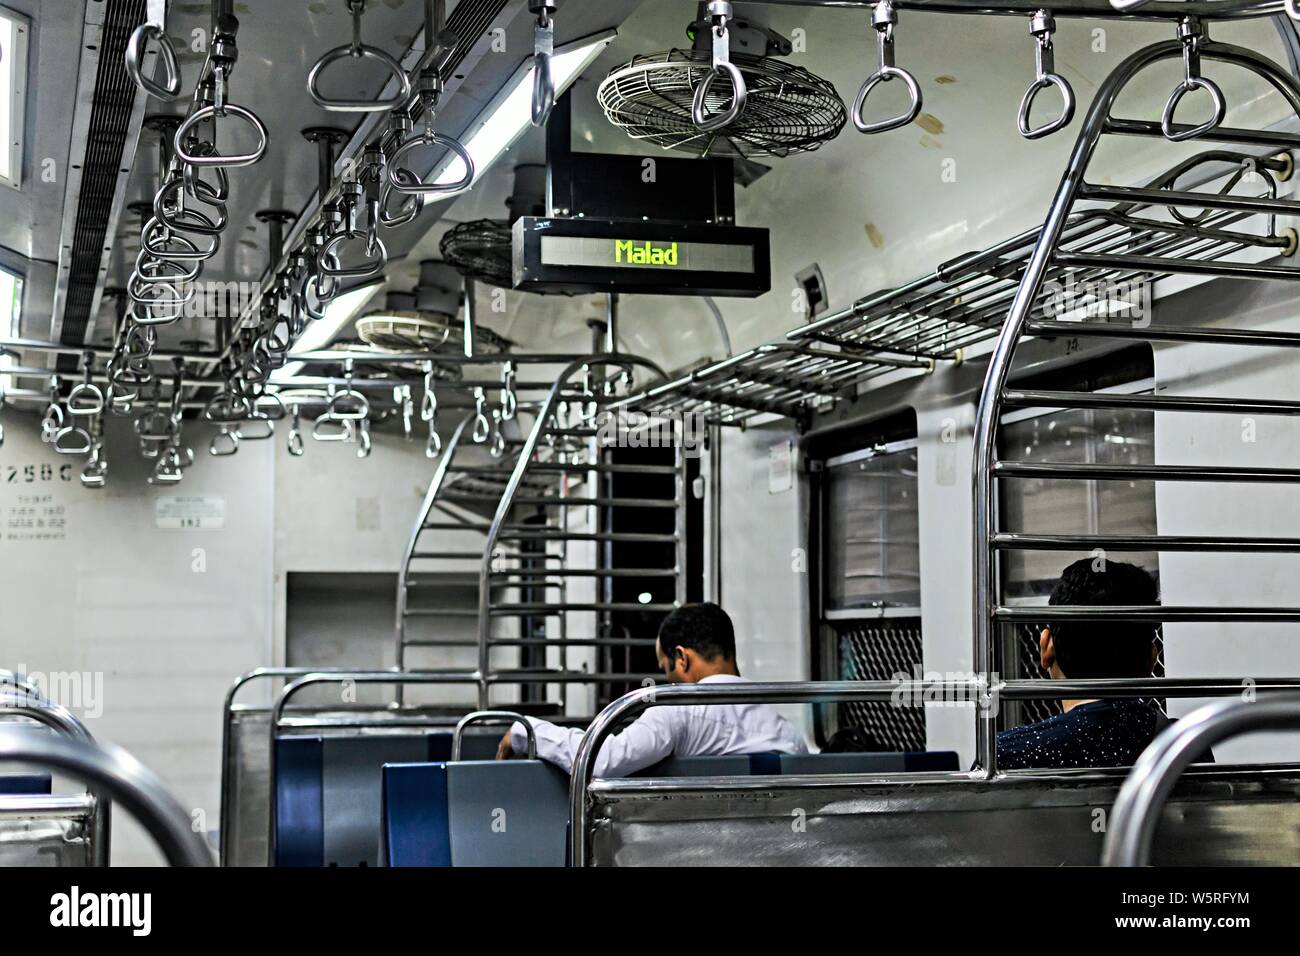 indicator in train Malad Railway Station Mumbai Maharashtra India Asia Stock Photo